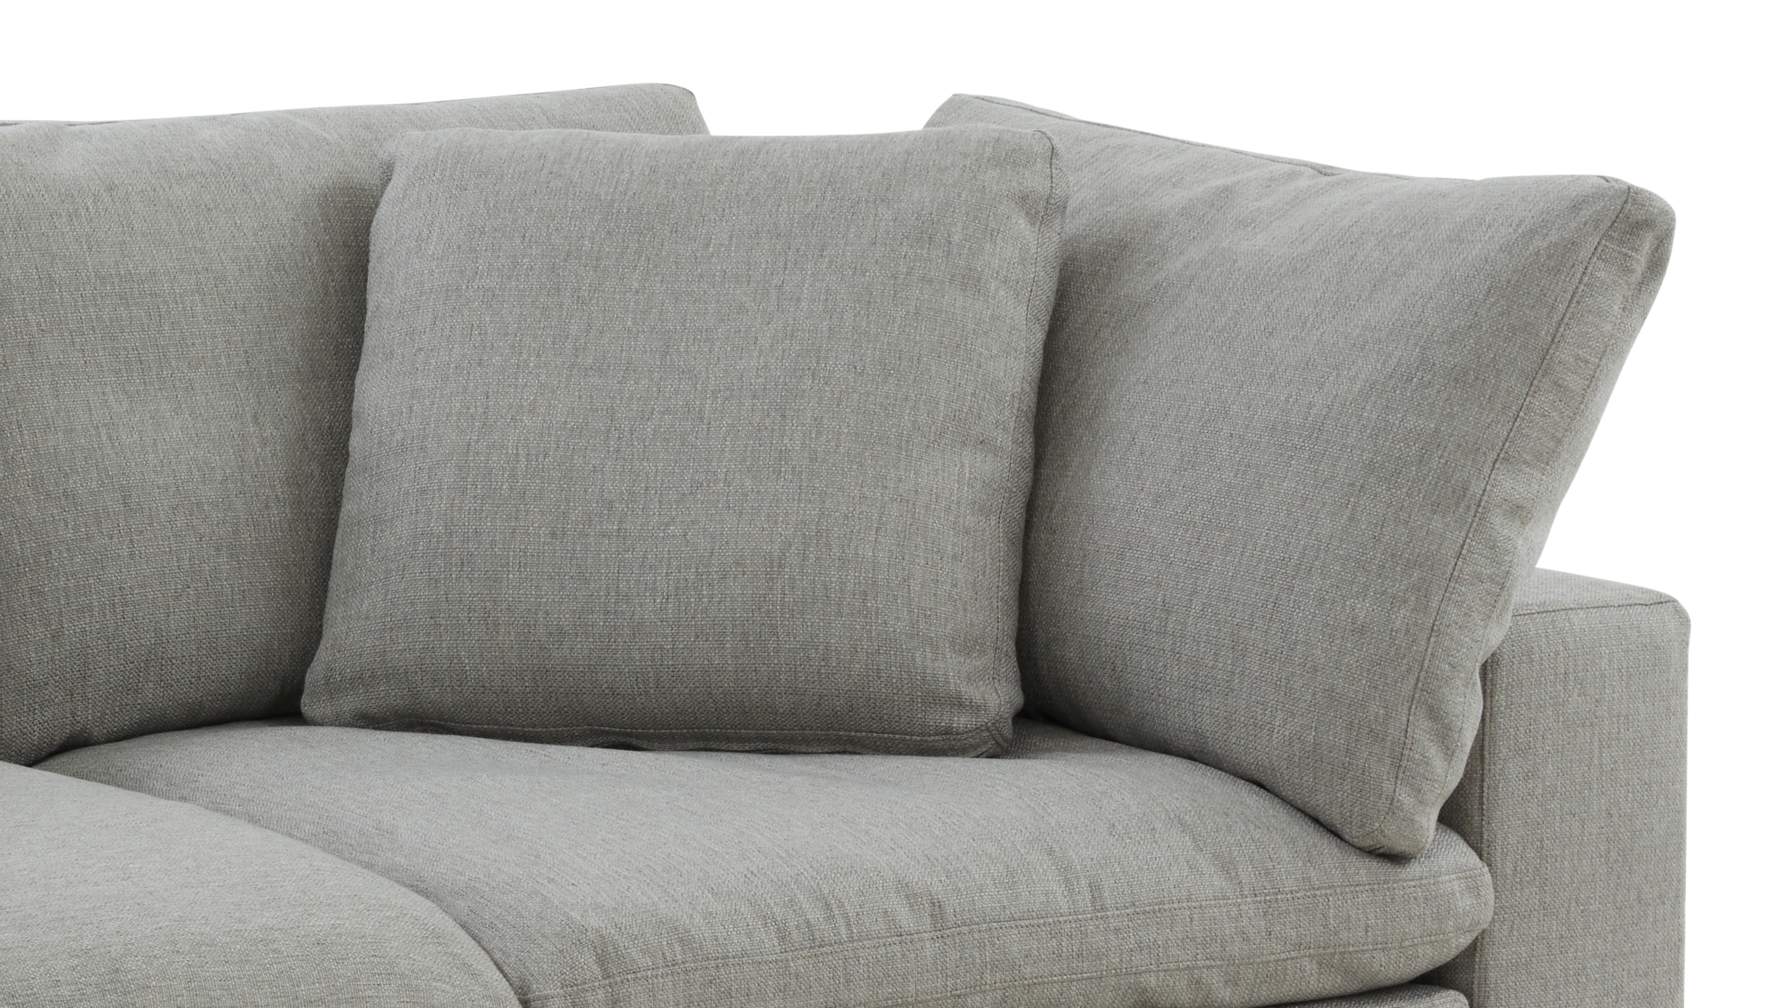 Movie Night™ 2 Piece Modular Sofa, Standard, Mist - Image 7